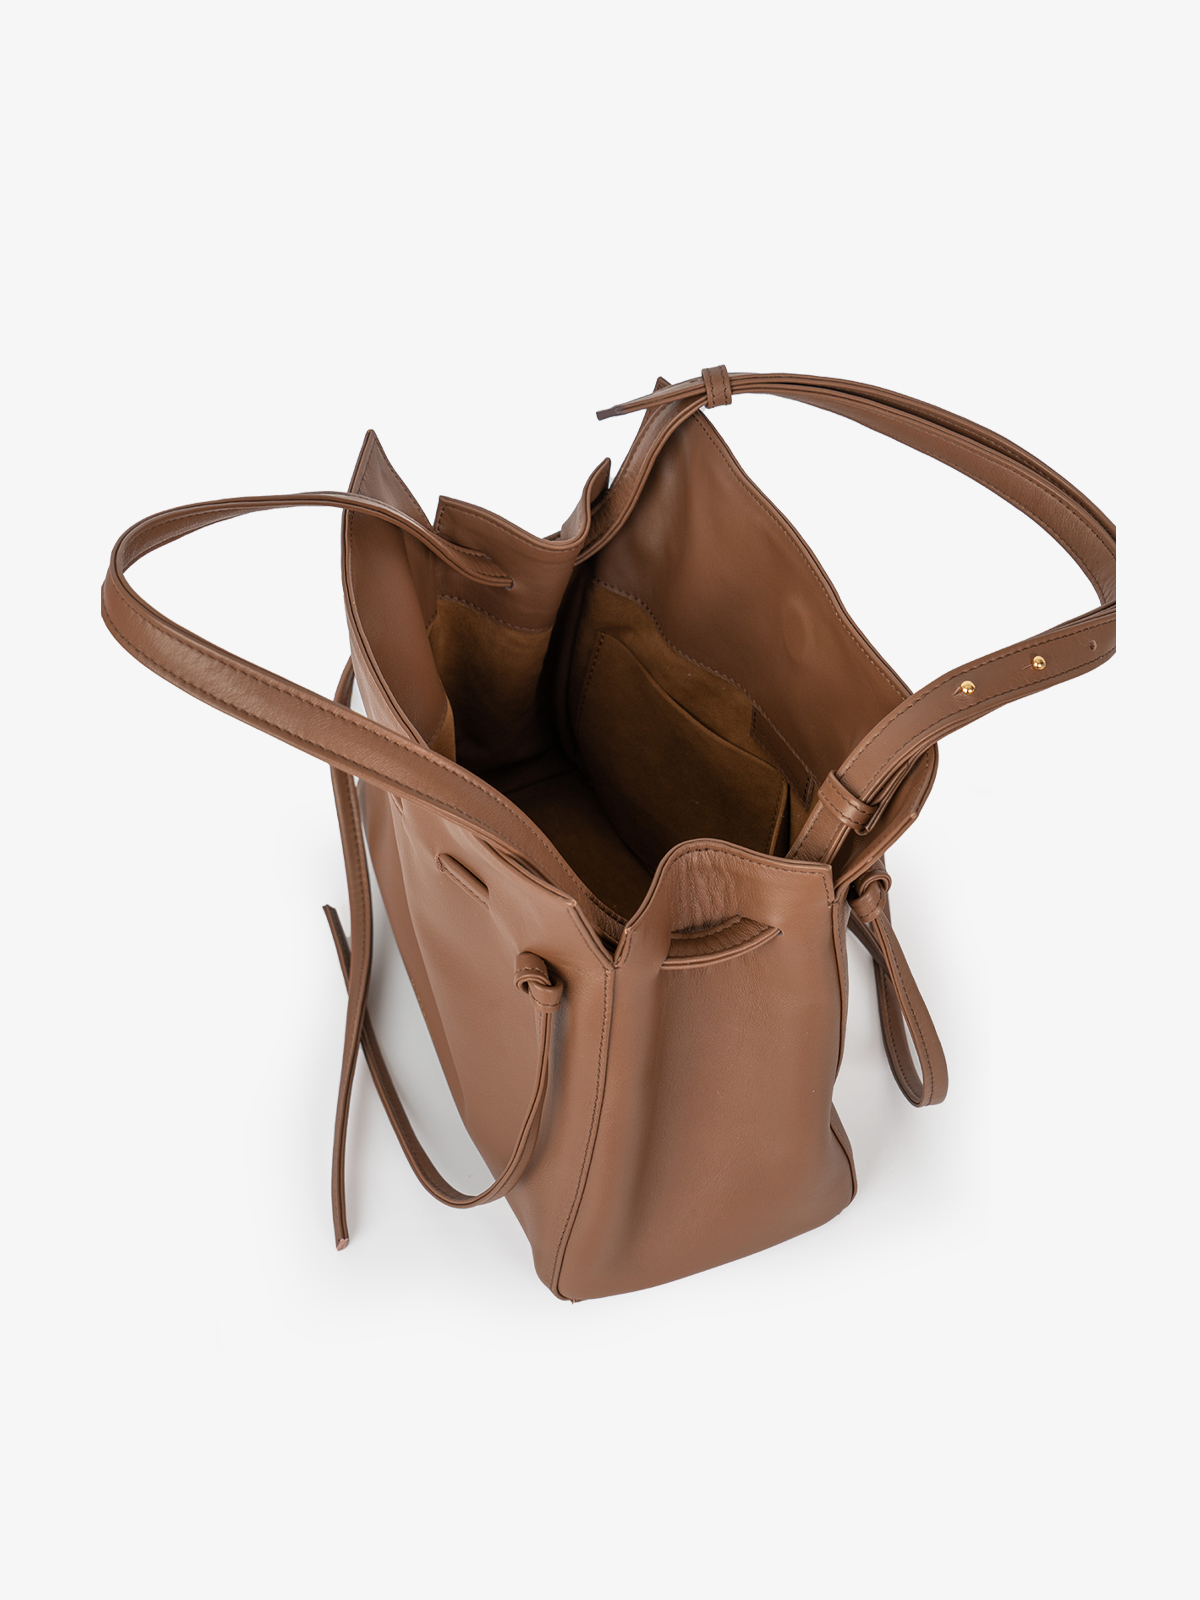 Marroque wendy 25 tote bag in Choco. Genuine leather bag. Shoulder bag crossbody bag.